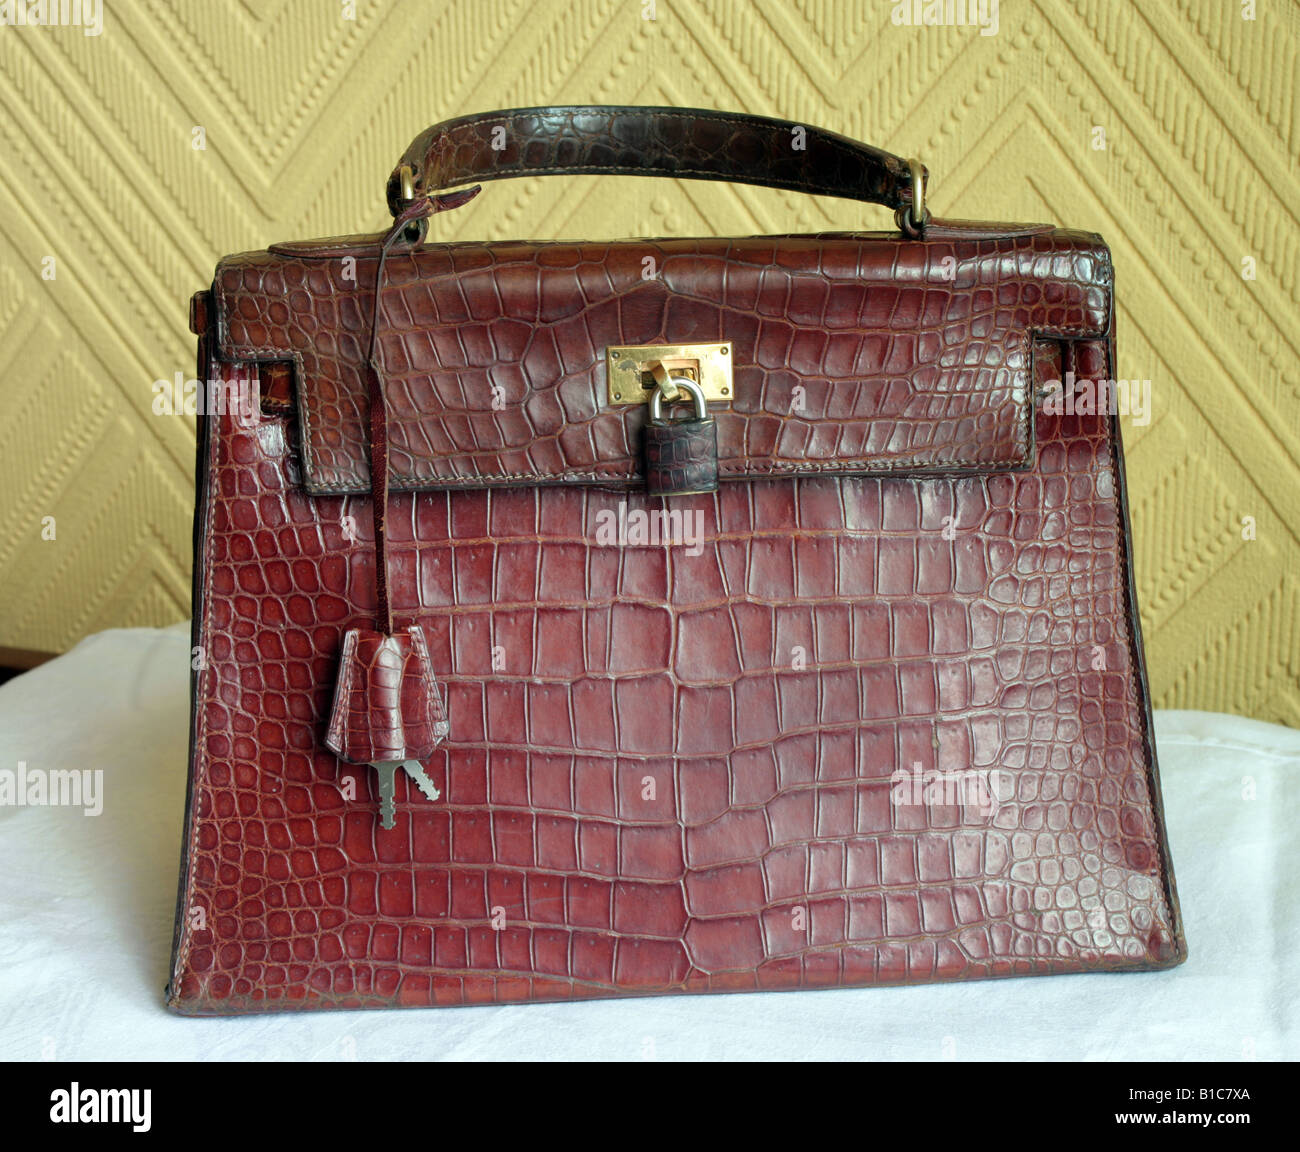 Hermes vintage crocodile Kelly handbag Stock Photo - Alamy